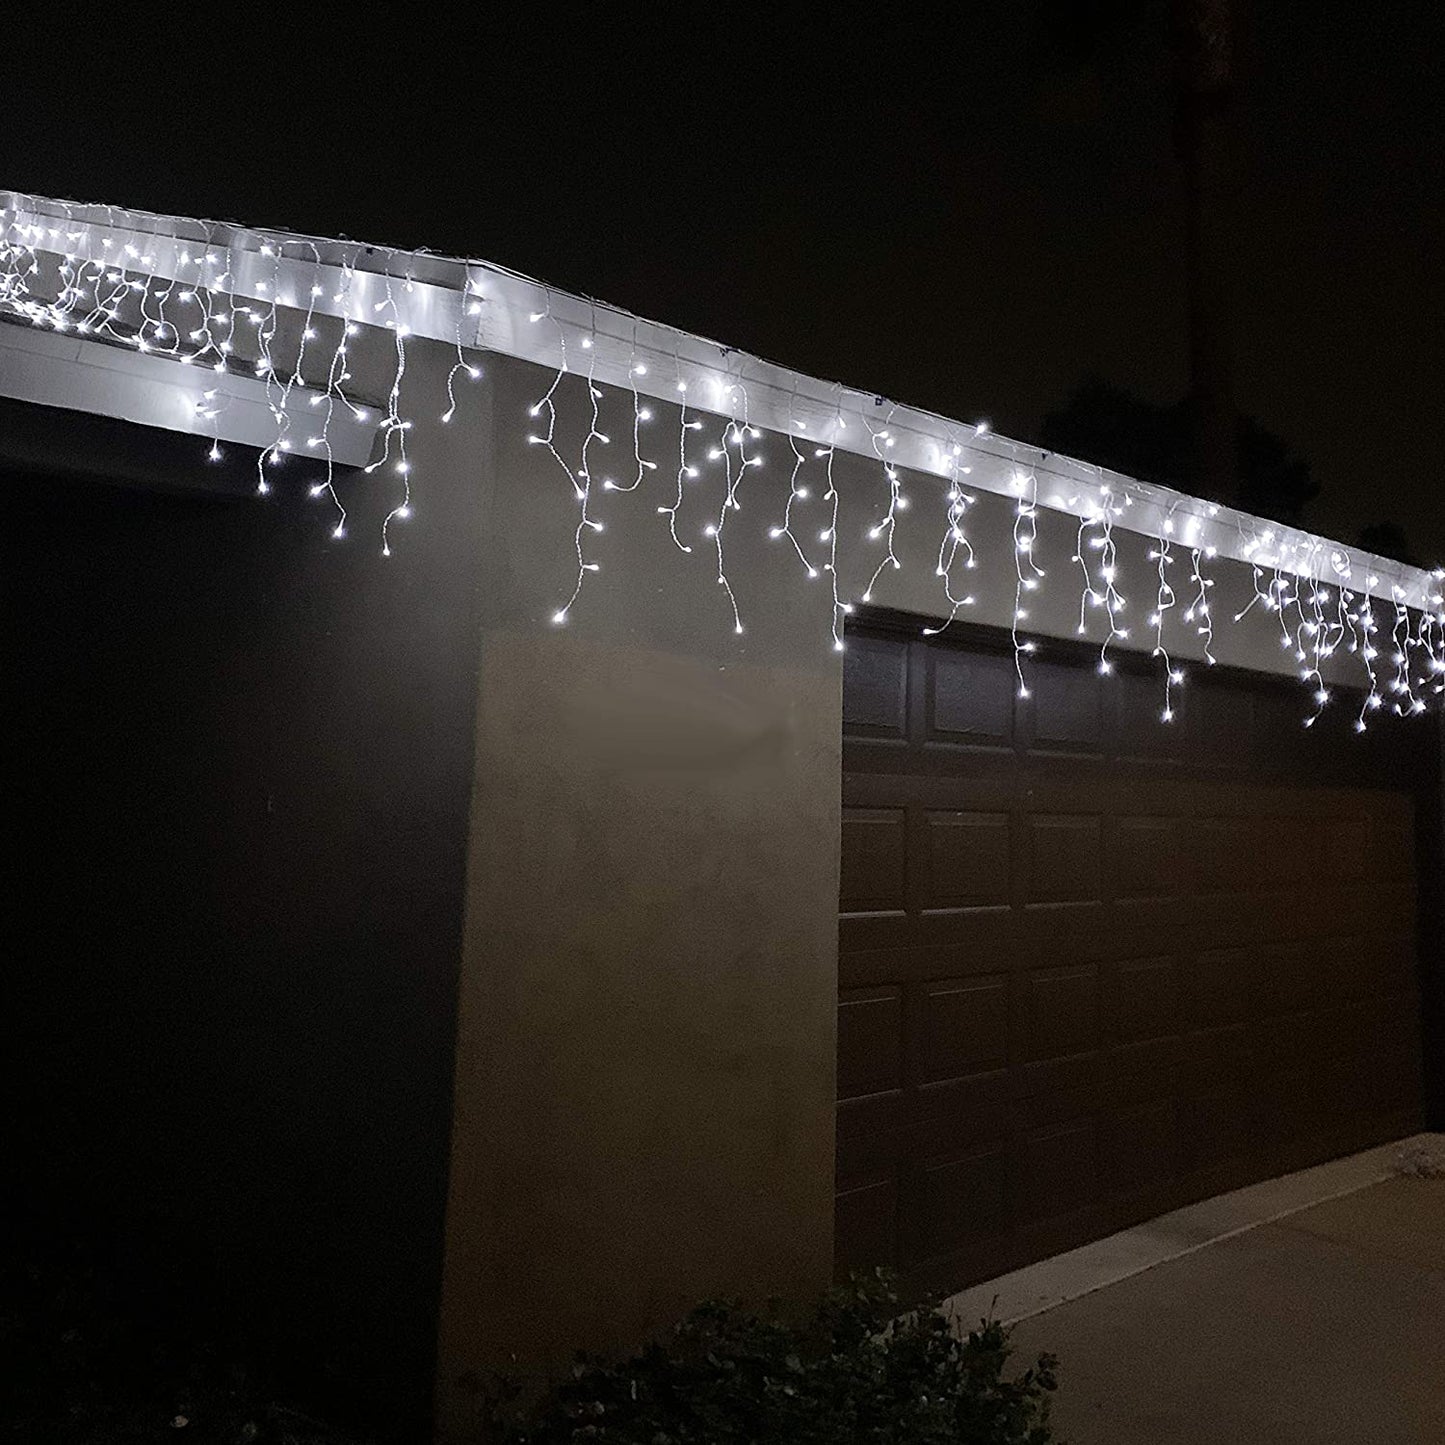 672 LED Christmas Icicle Lights, White